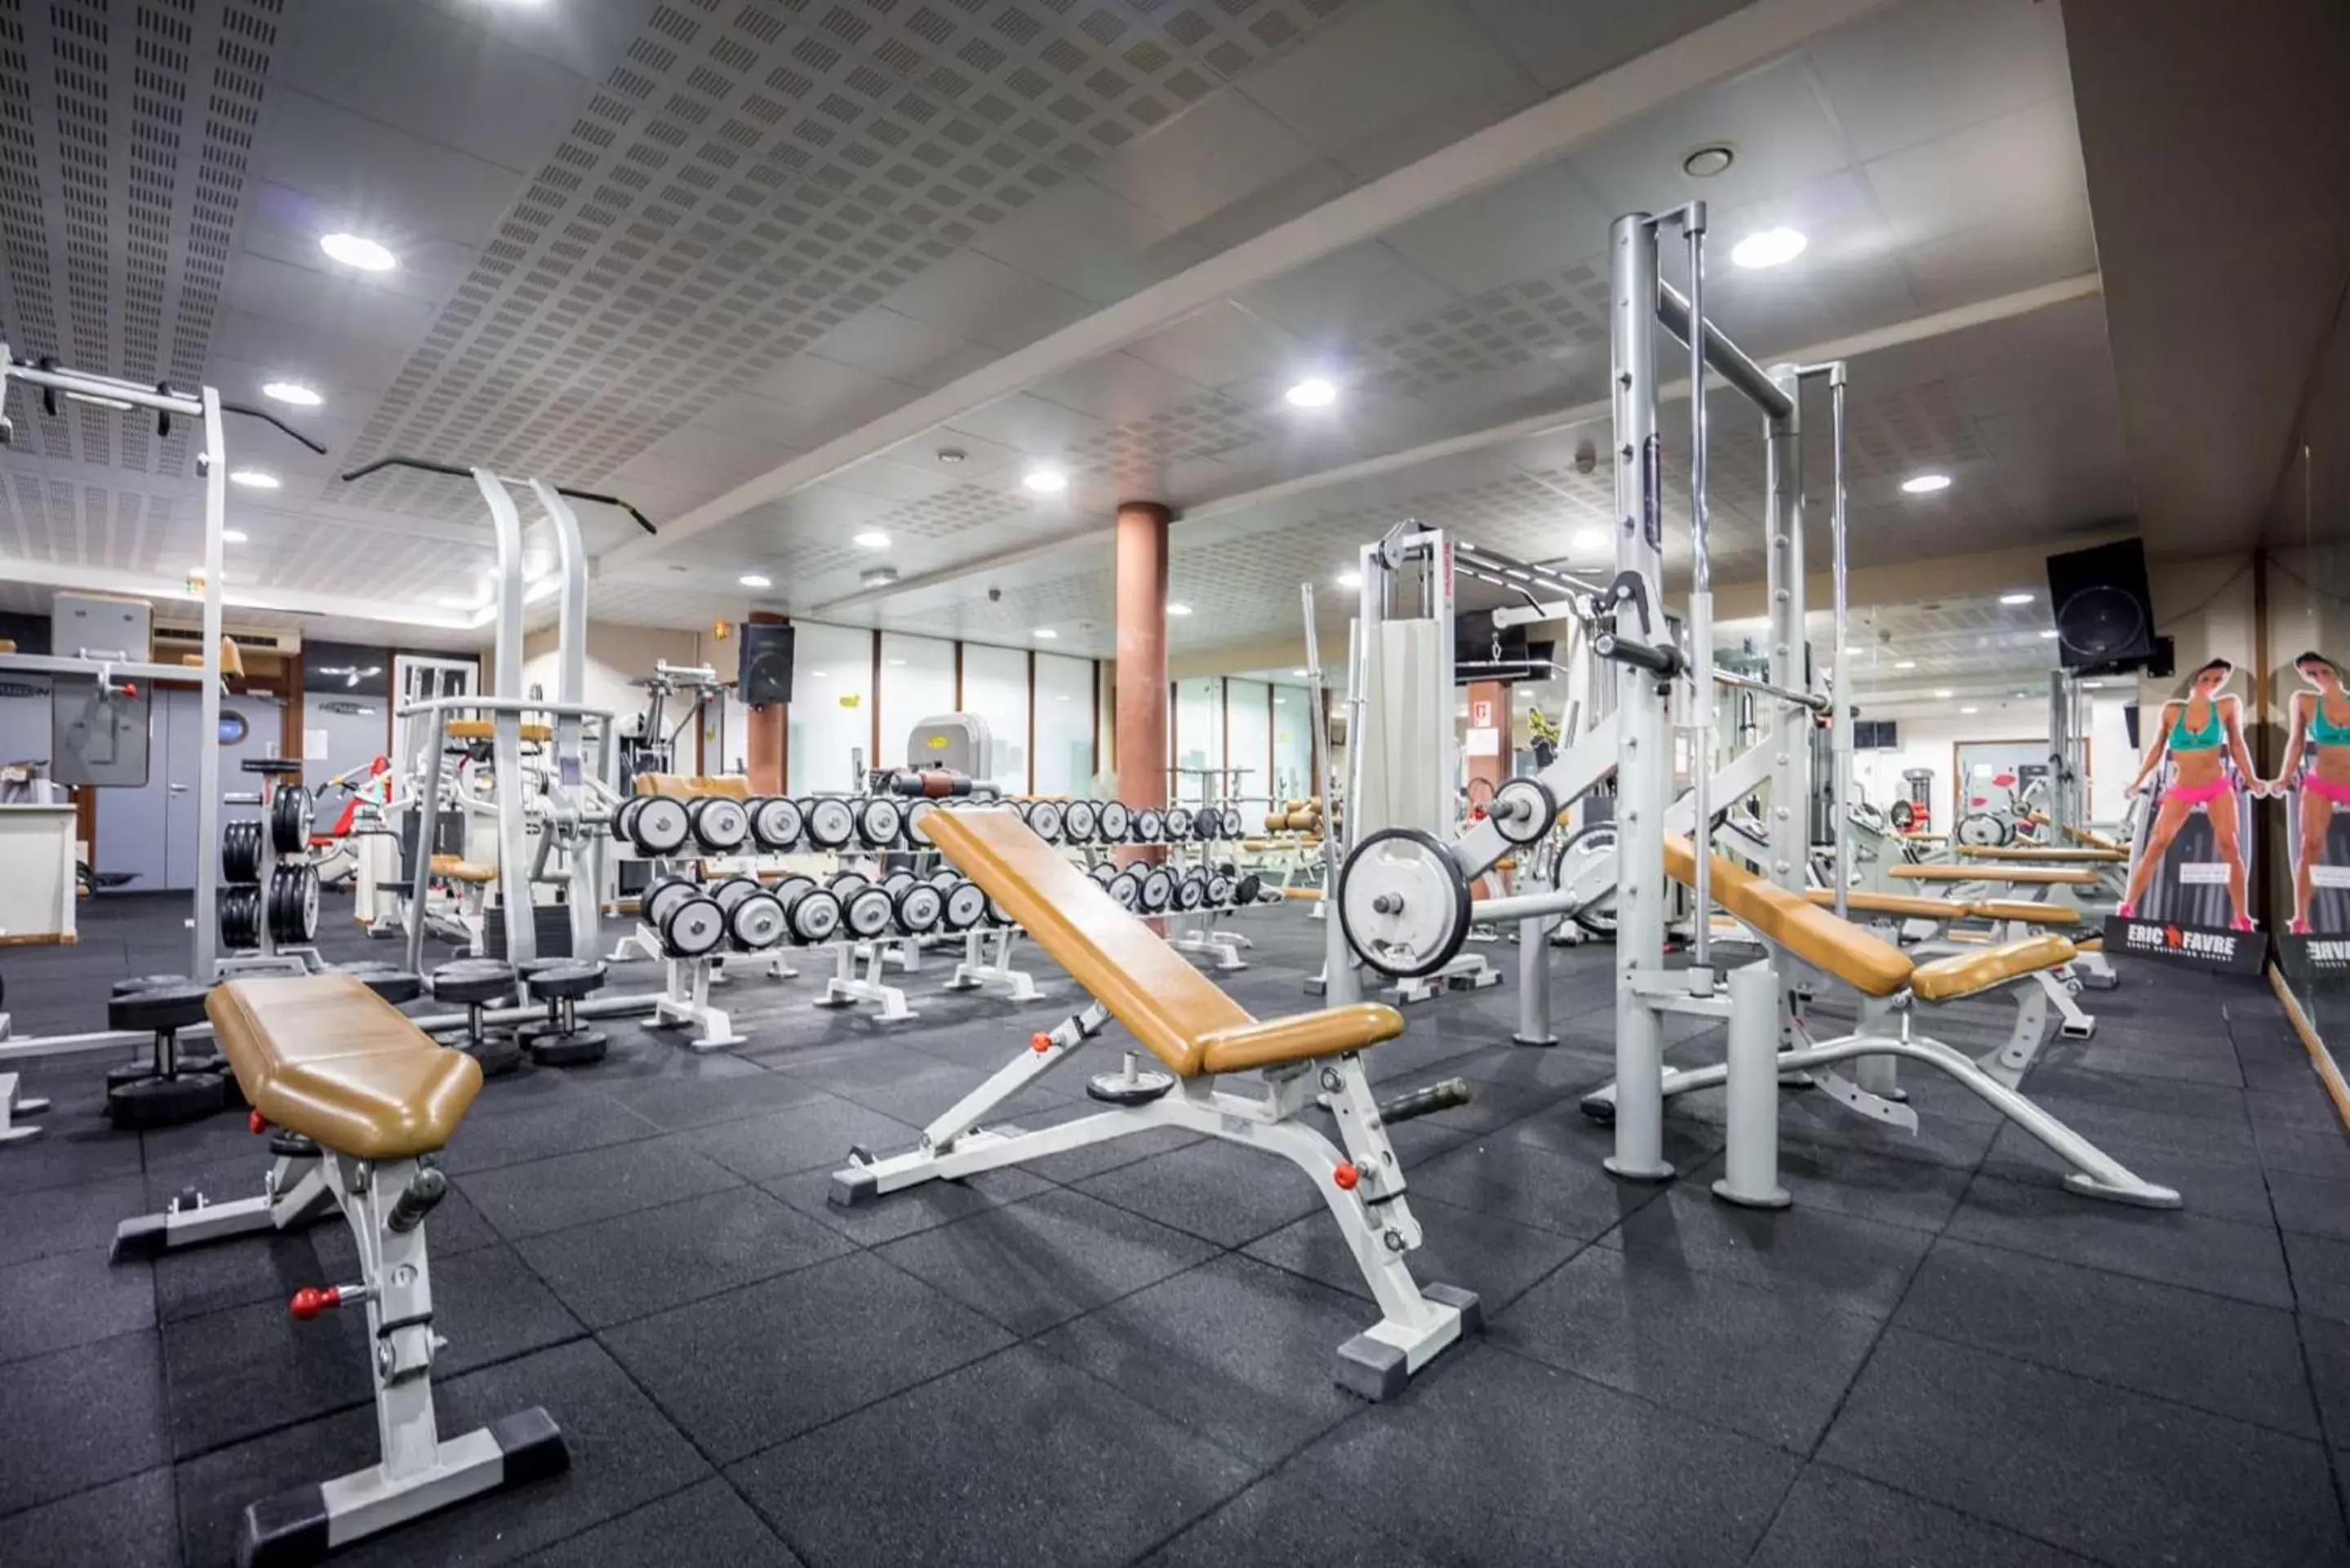 Fitness centre/facilities, Fitness Center/Facilities in Best Western Hotel Ile de France